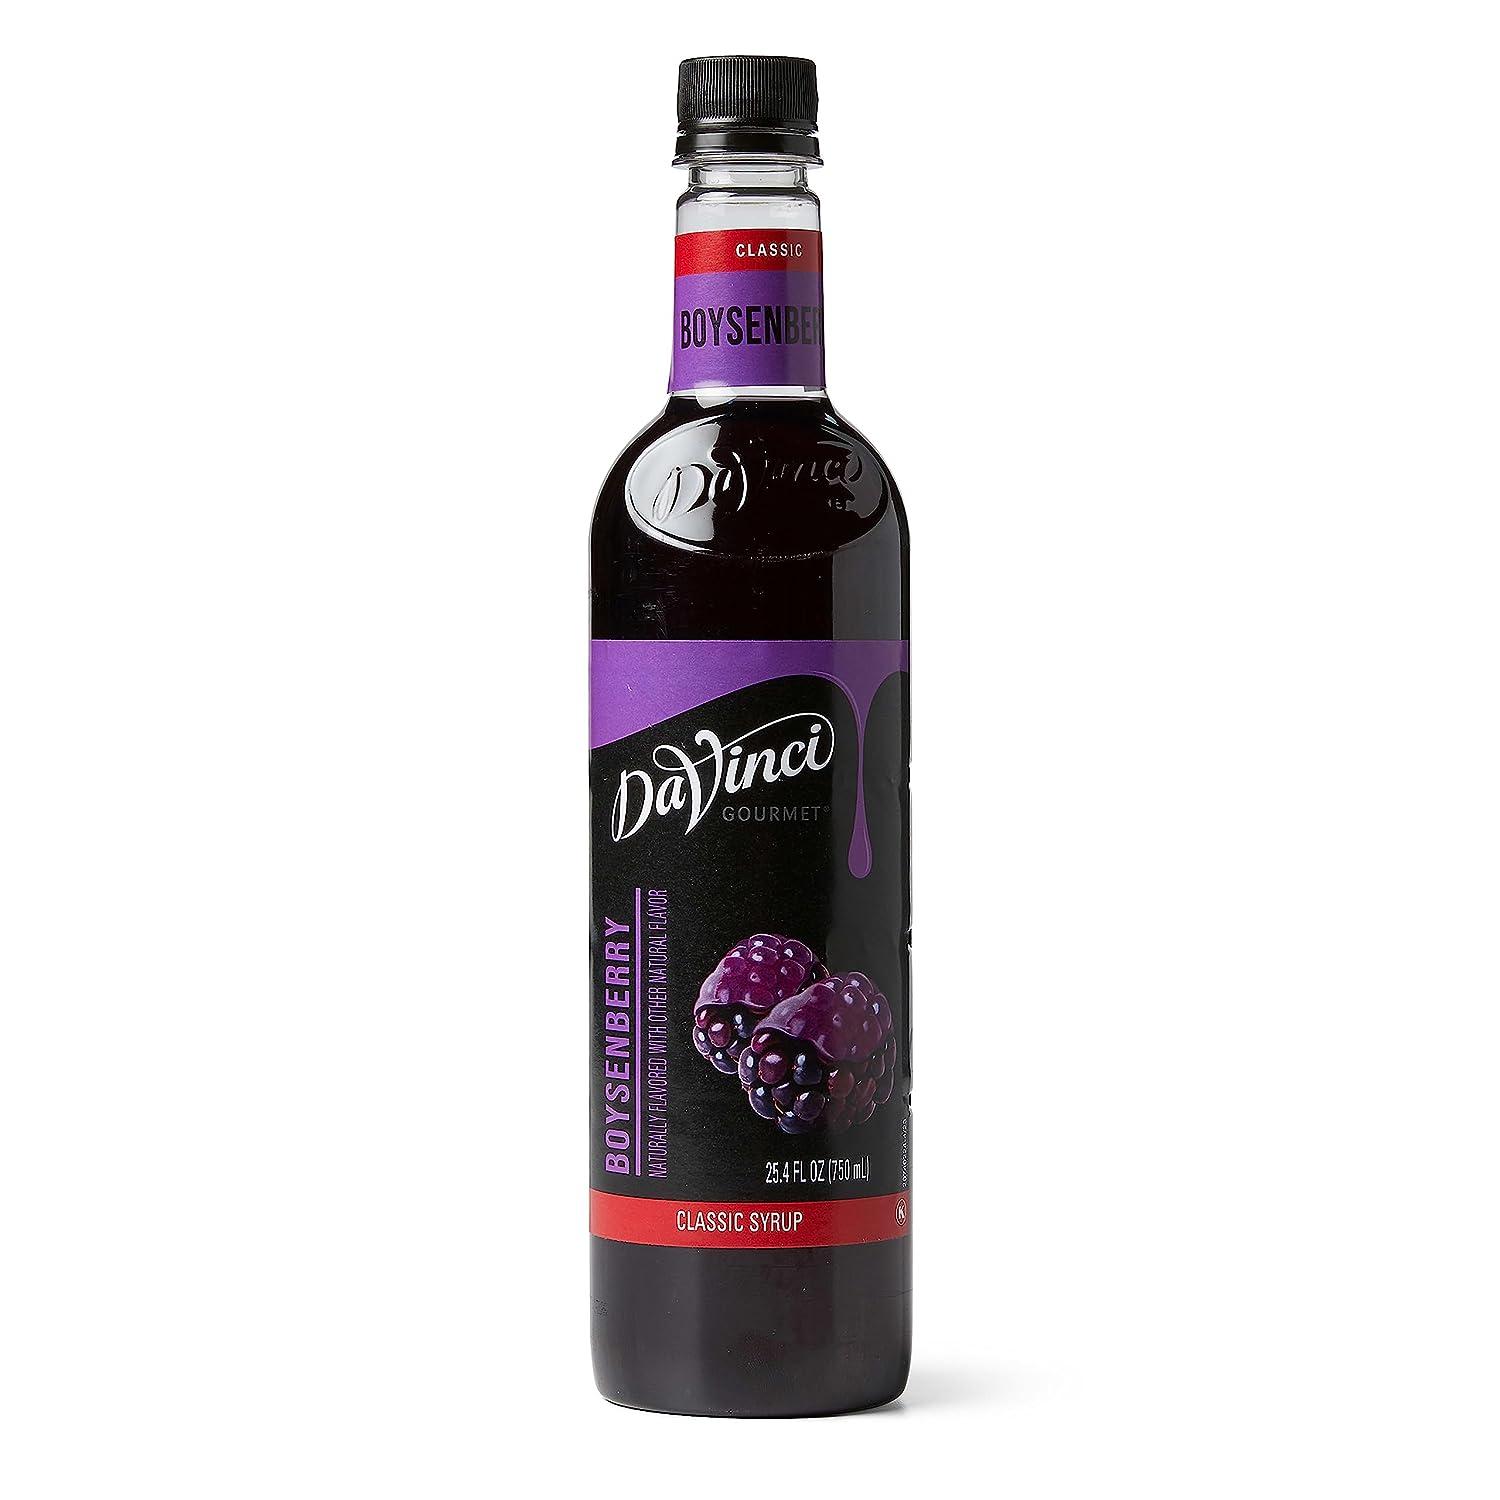 DaVinci Gourmet Boysenberry Syrup for $4.12